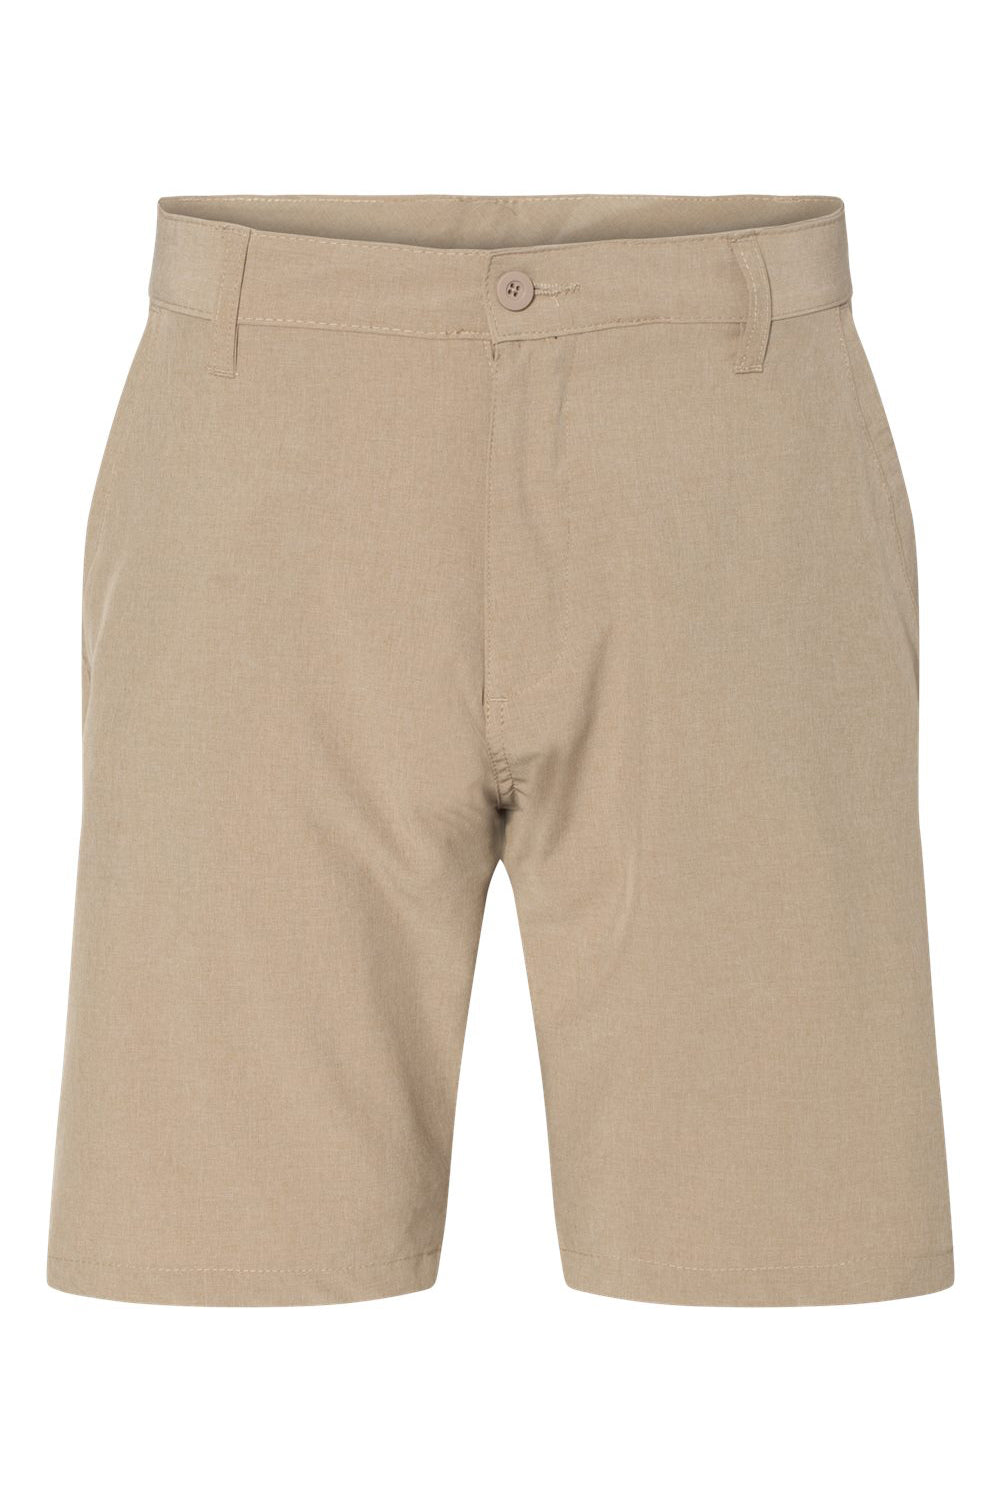 Burnside 9820 Mens Hybrid Stretch Shorts w/ Pockets Heather Khaki Flat Front